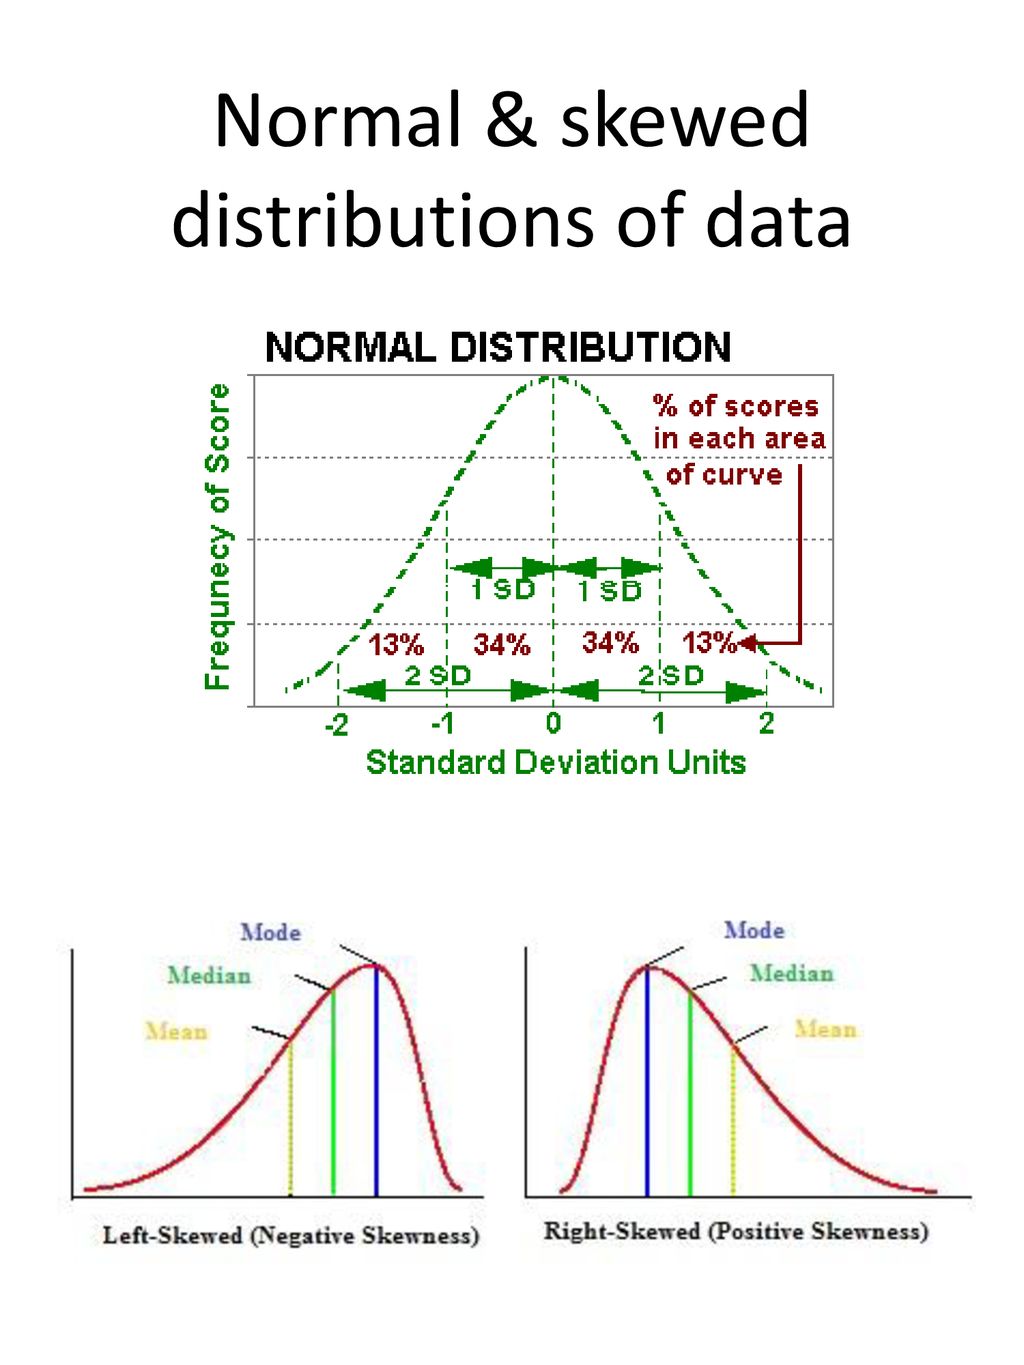 Normal & skewed distributions of data